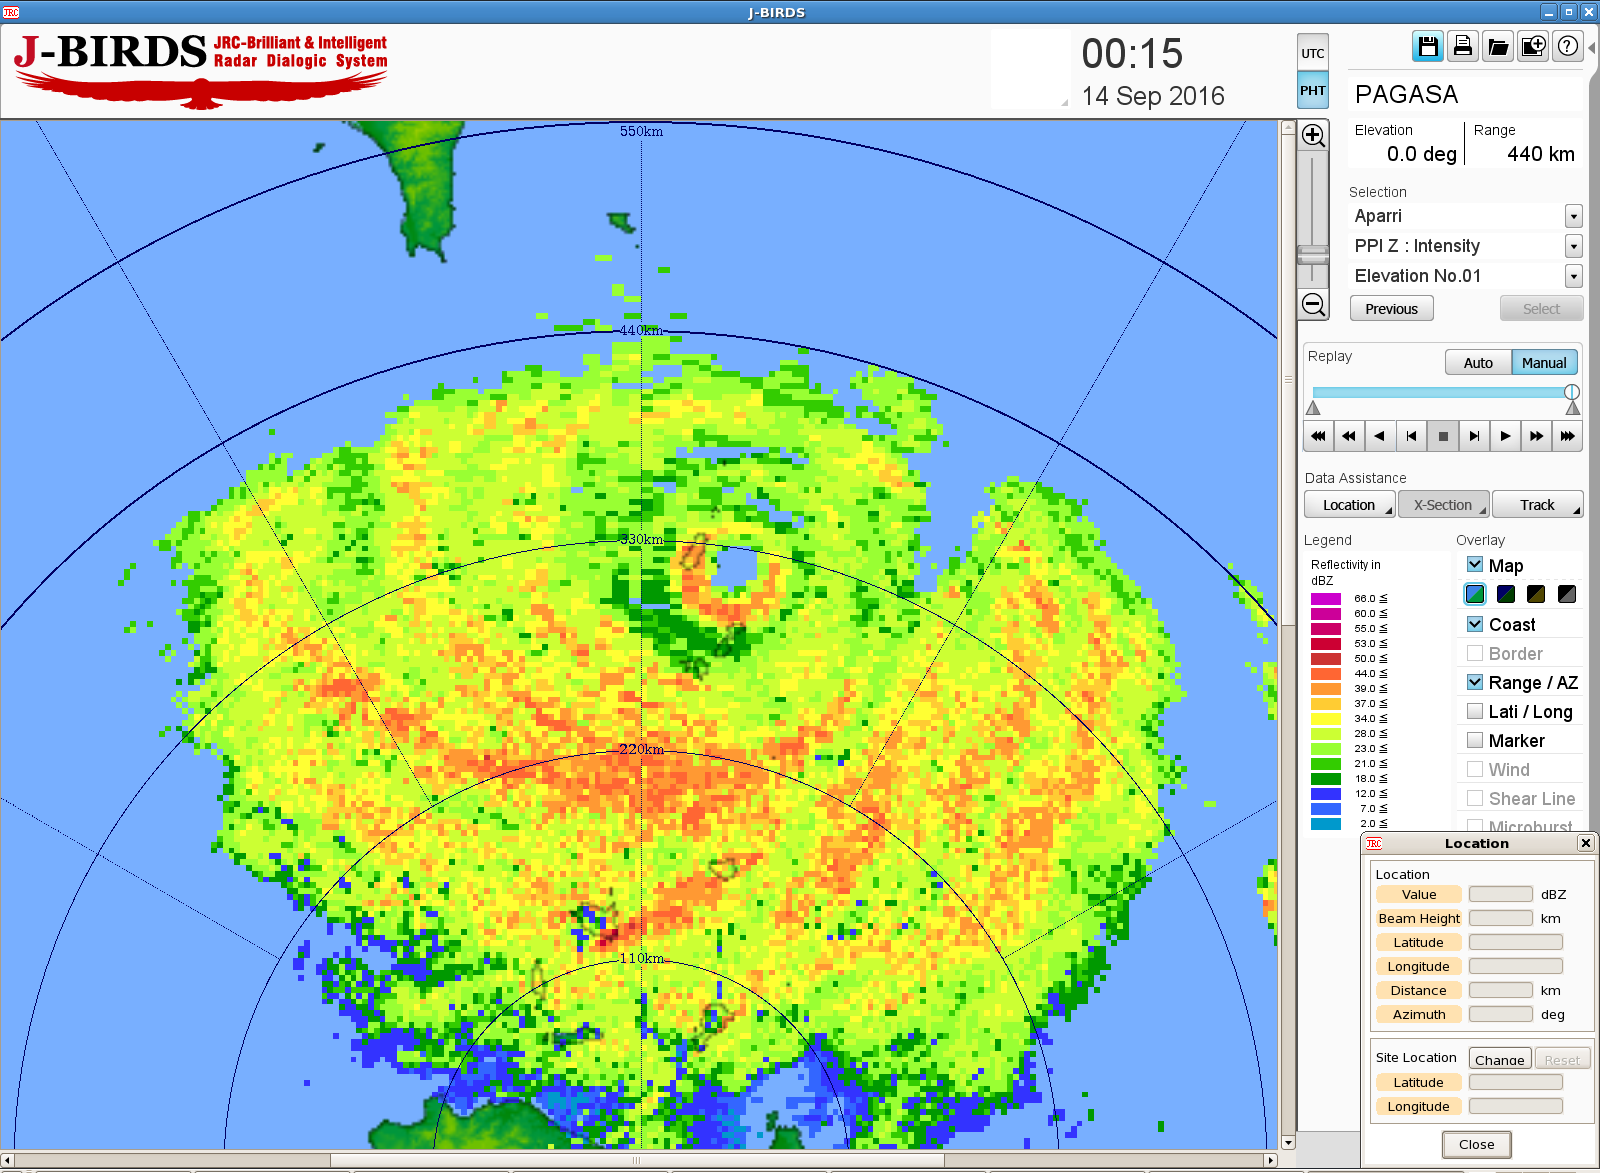 Radar image as of September 14, 12:15 am. Image courtesy of PAGASA 